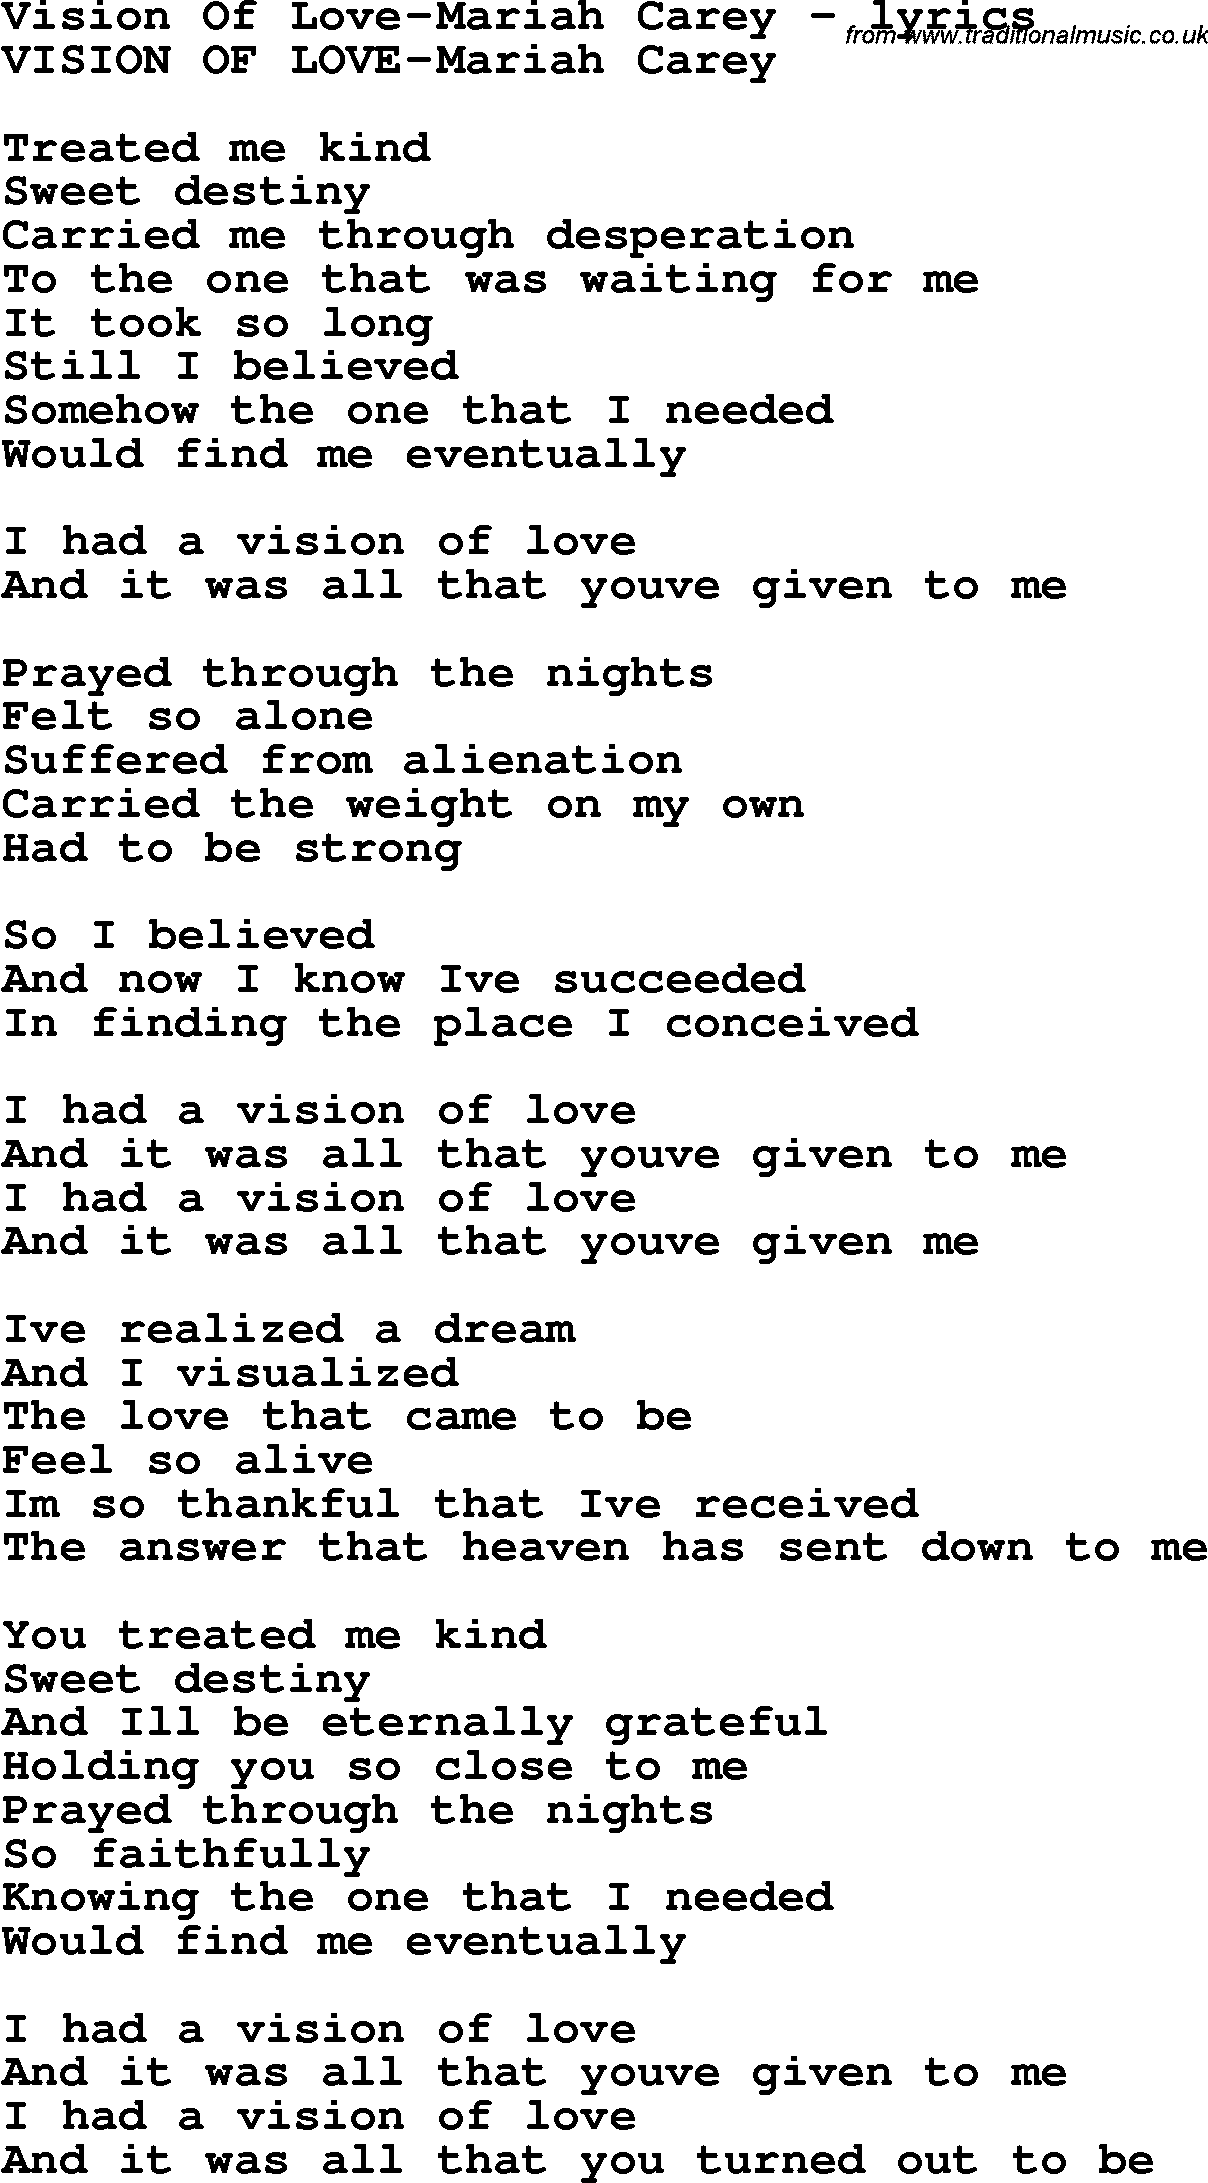 Love Song Lyrics for: Vision Of Love-Mariah Carey